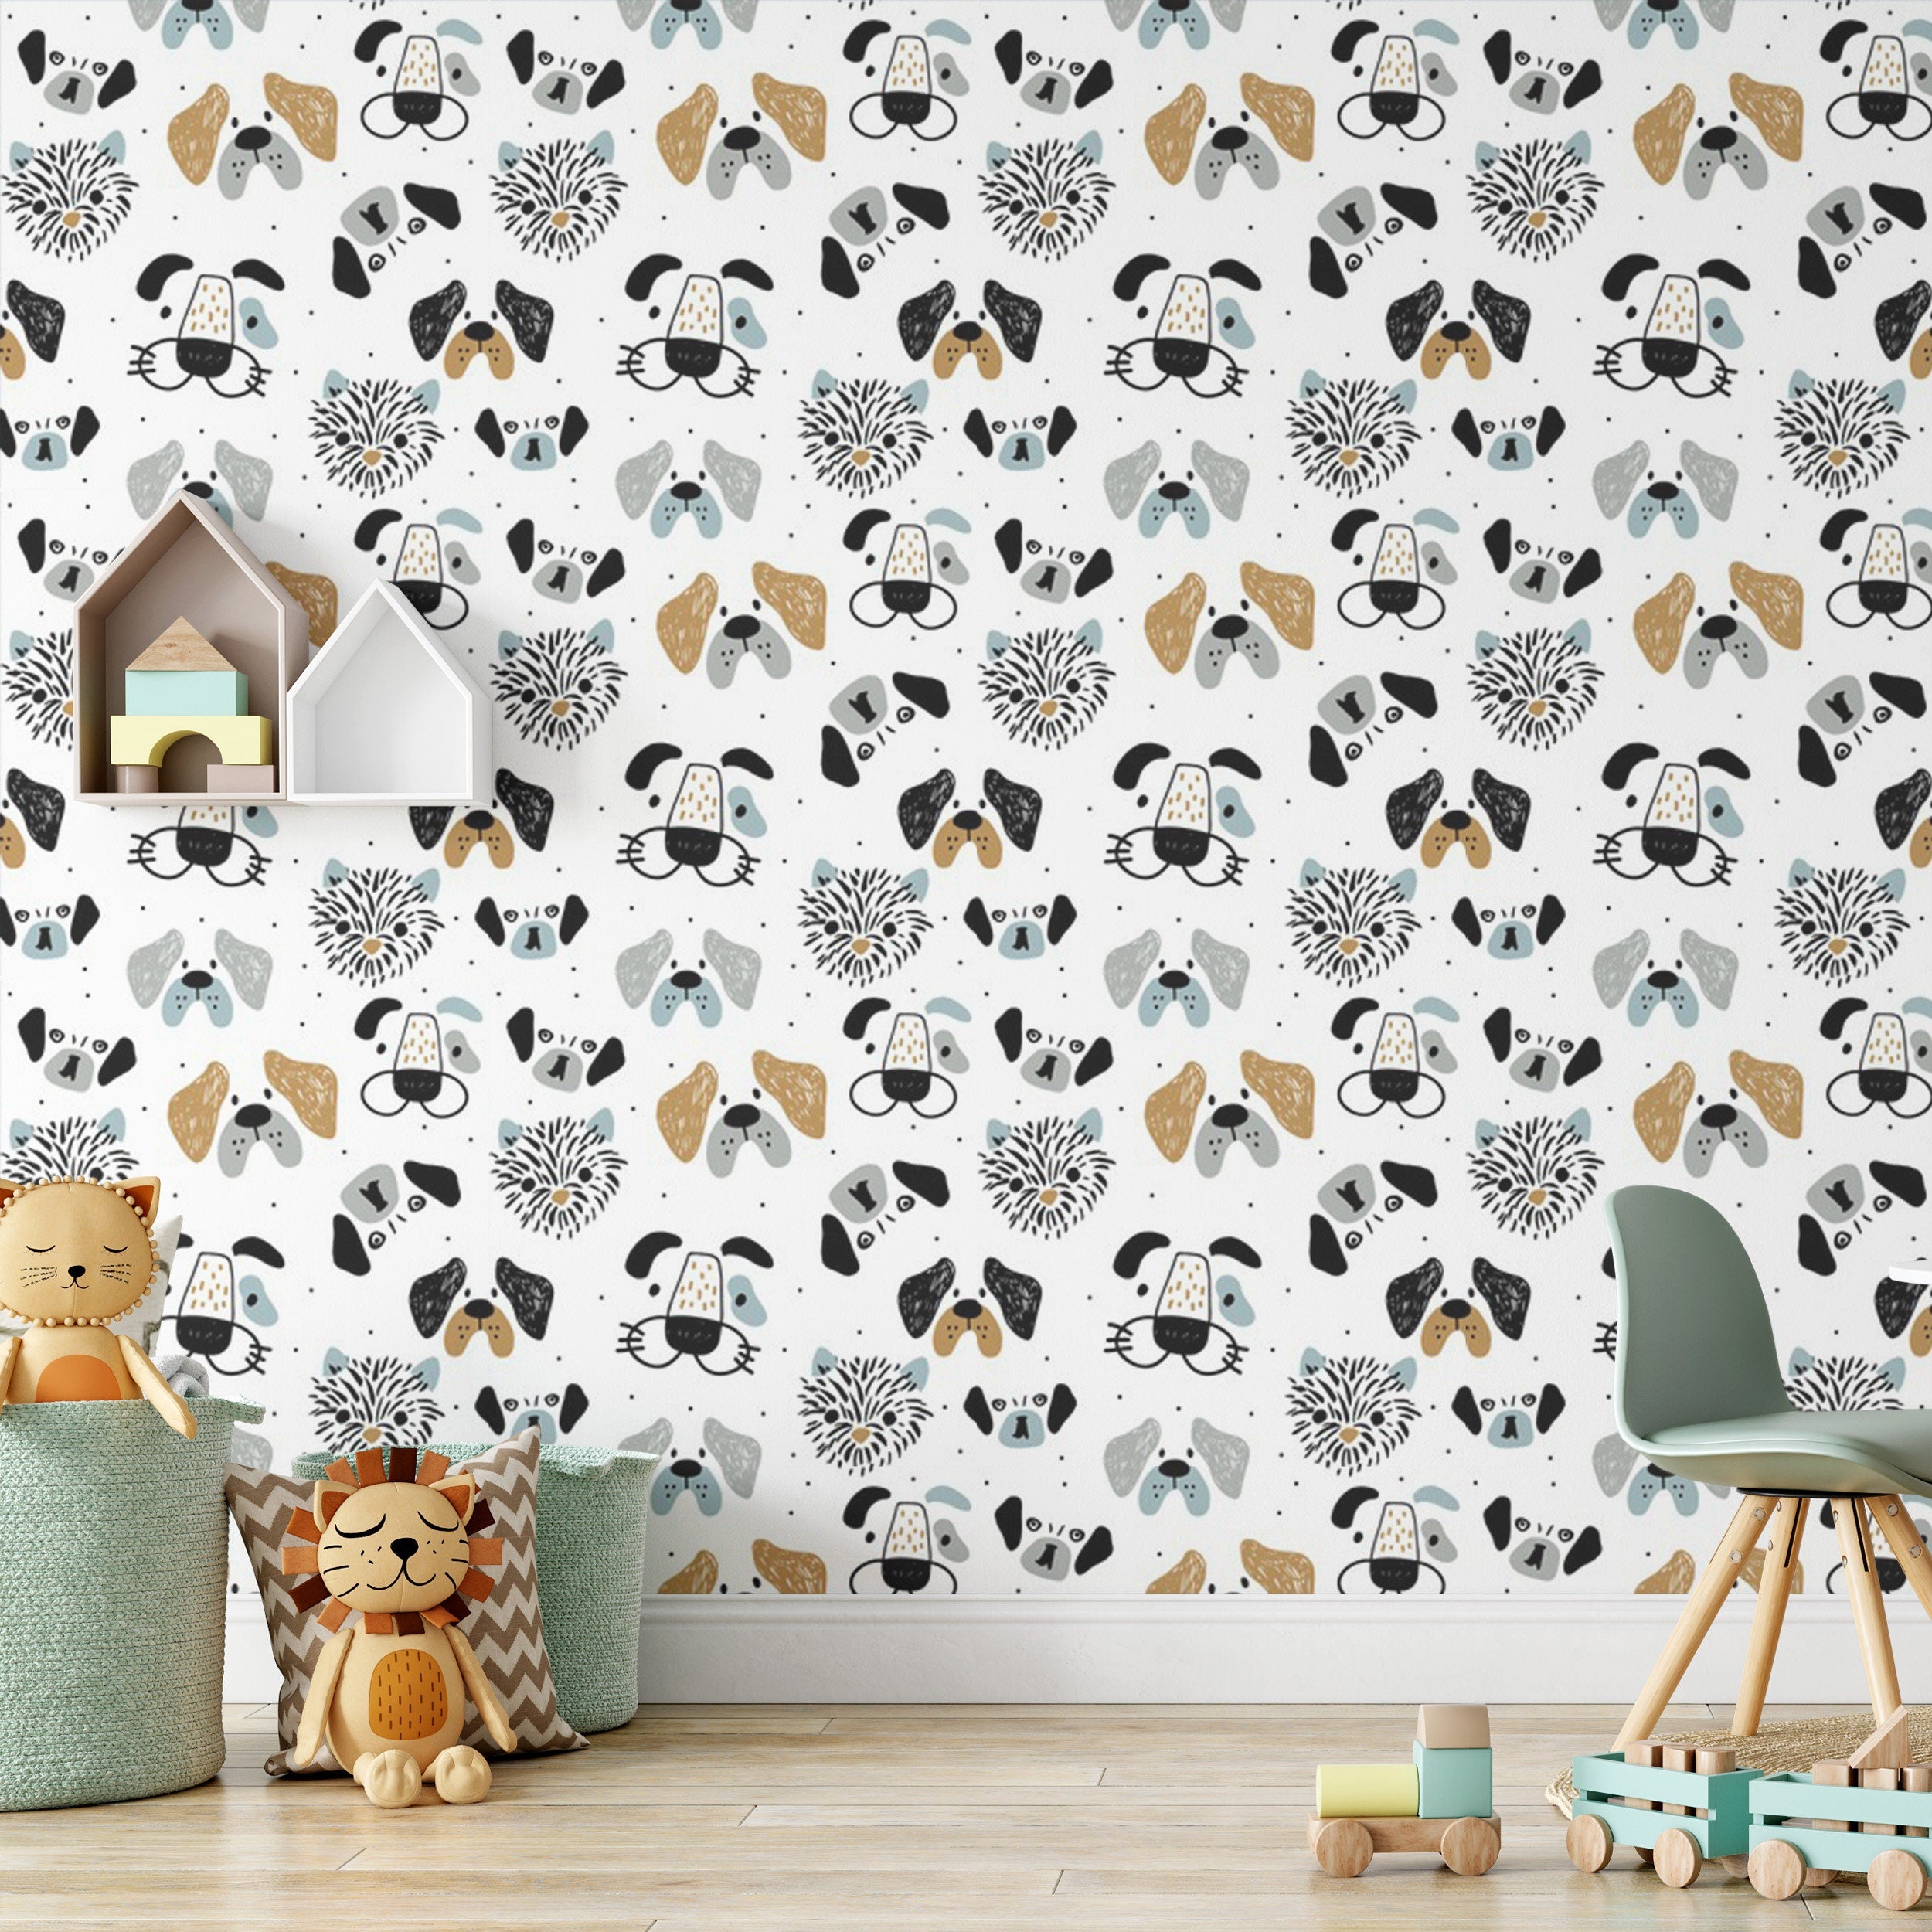 PeelandStick Removable Wallpaper Dogs Kids Dachshund Husky Puppies  eBay